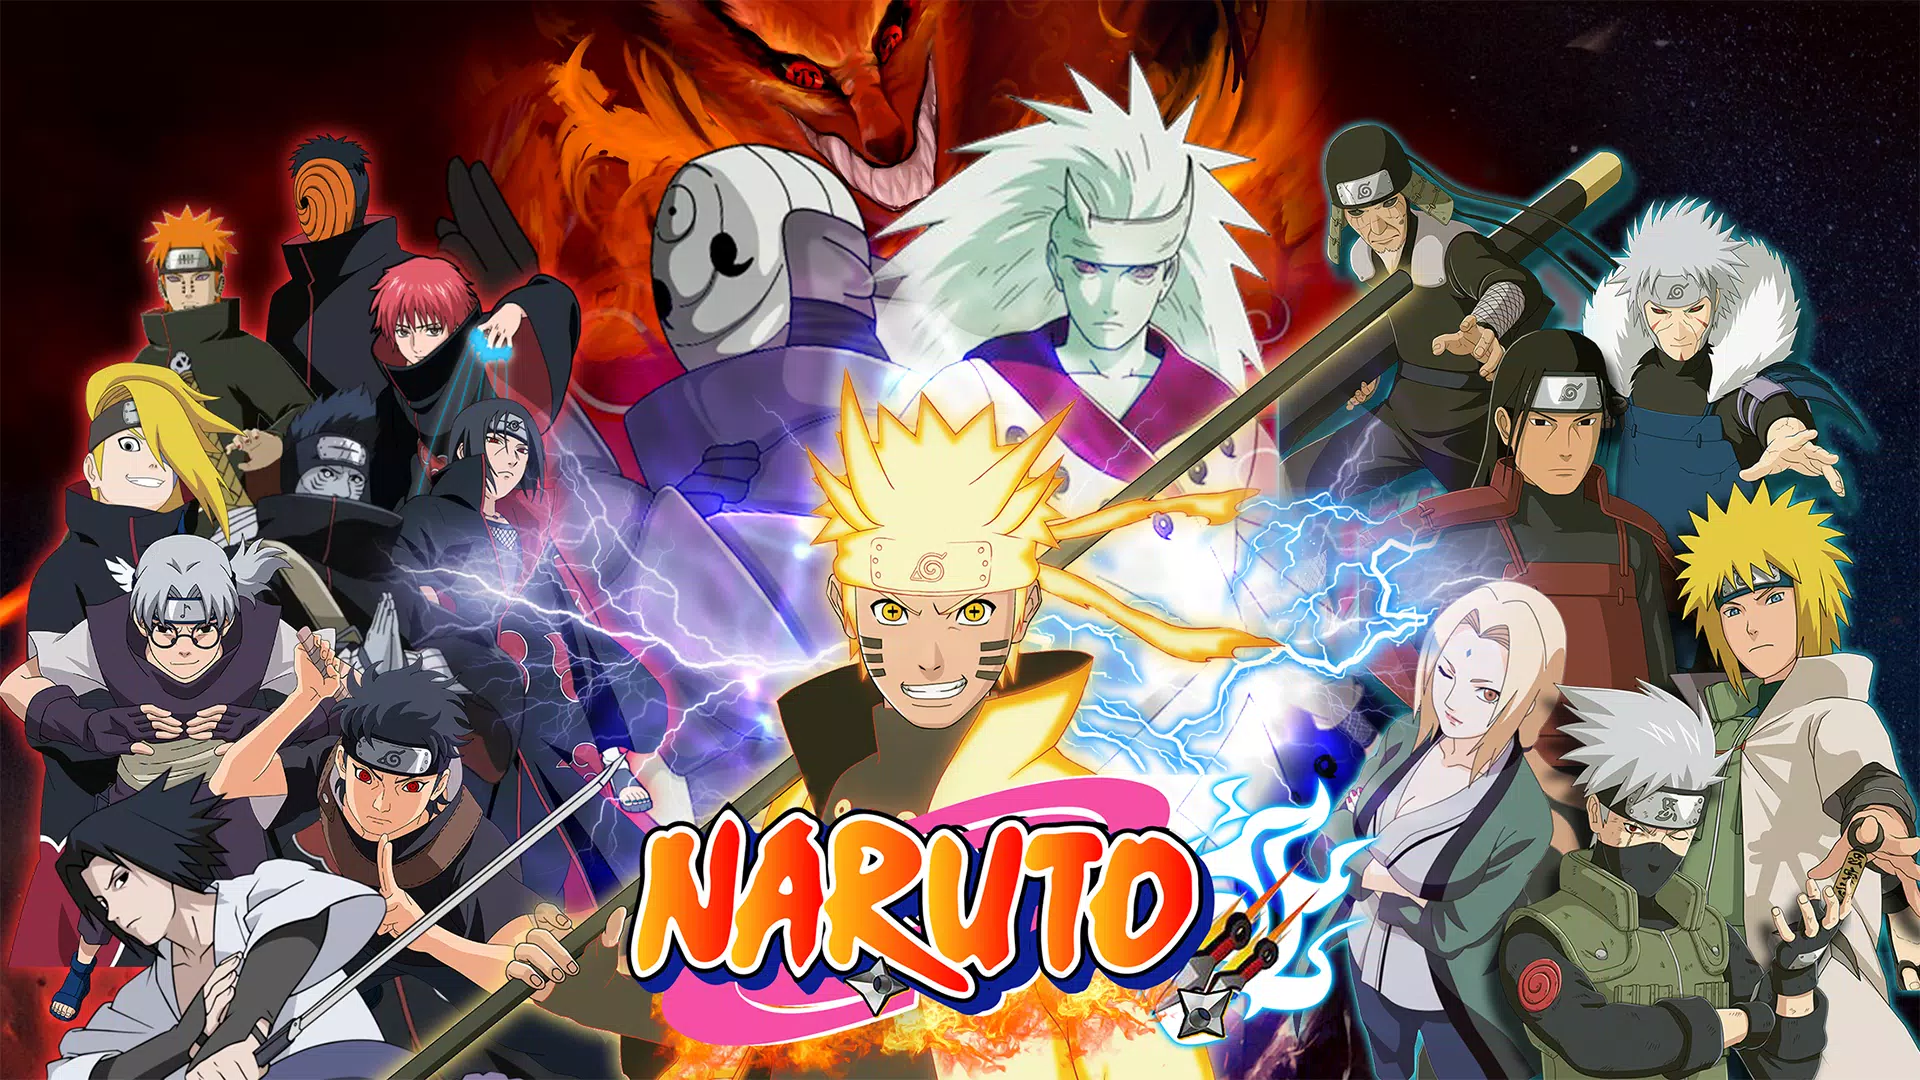 Naruto: Ultimate Storm para Android - Baixe o APK na Uptodown